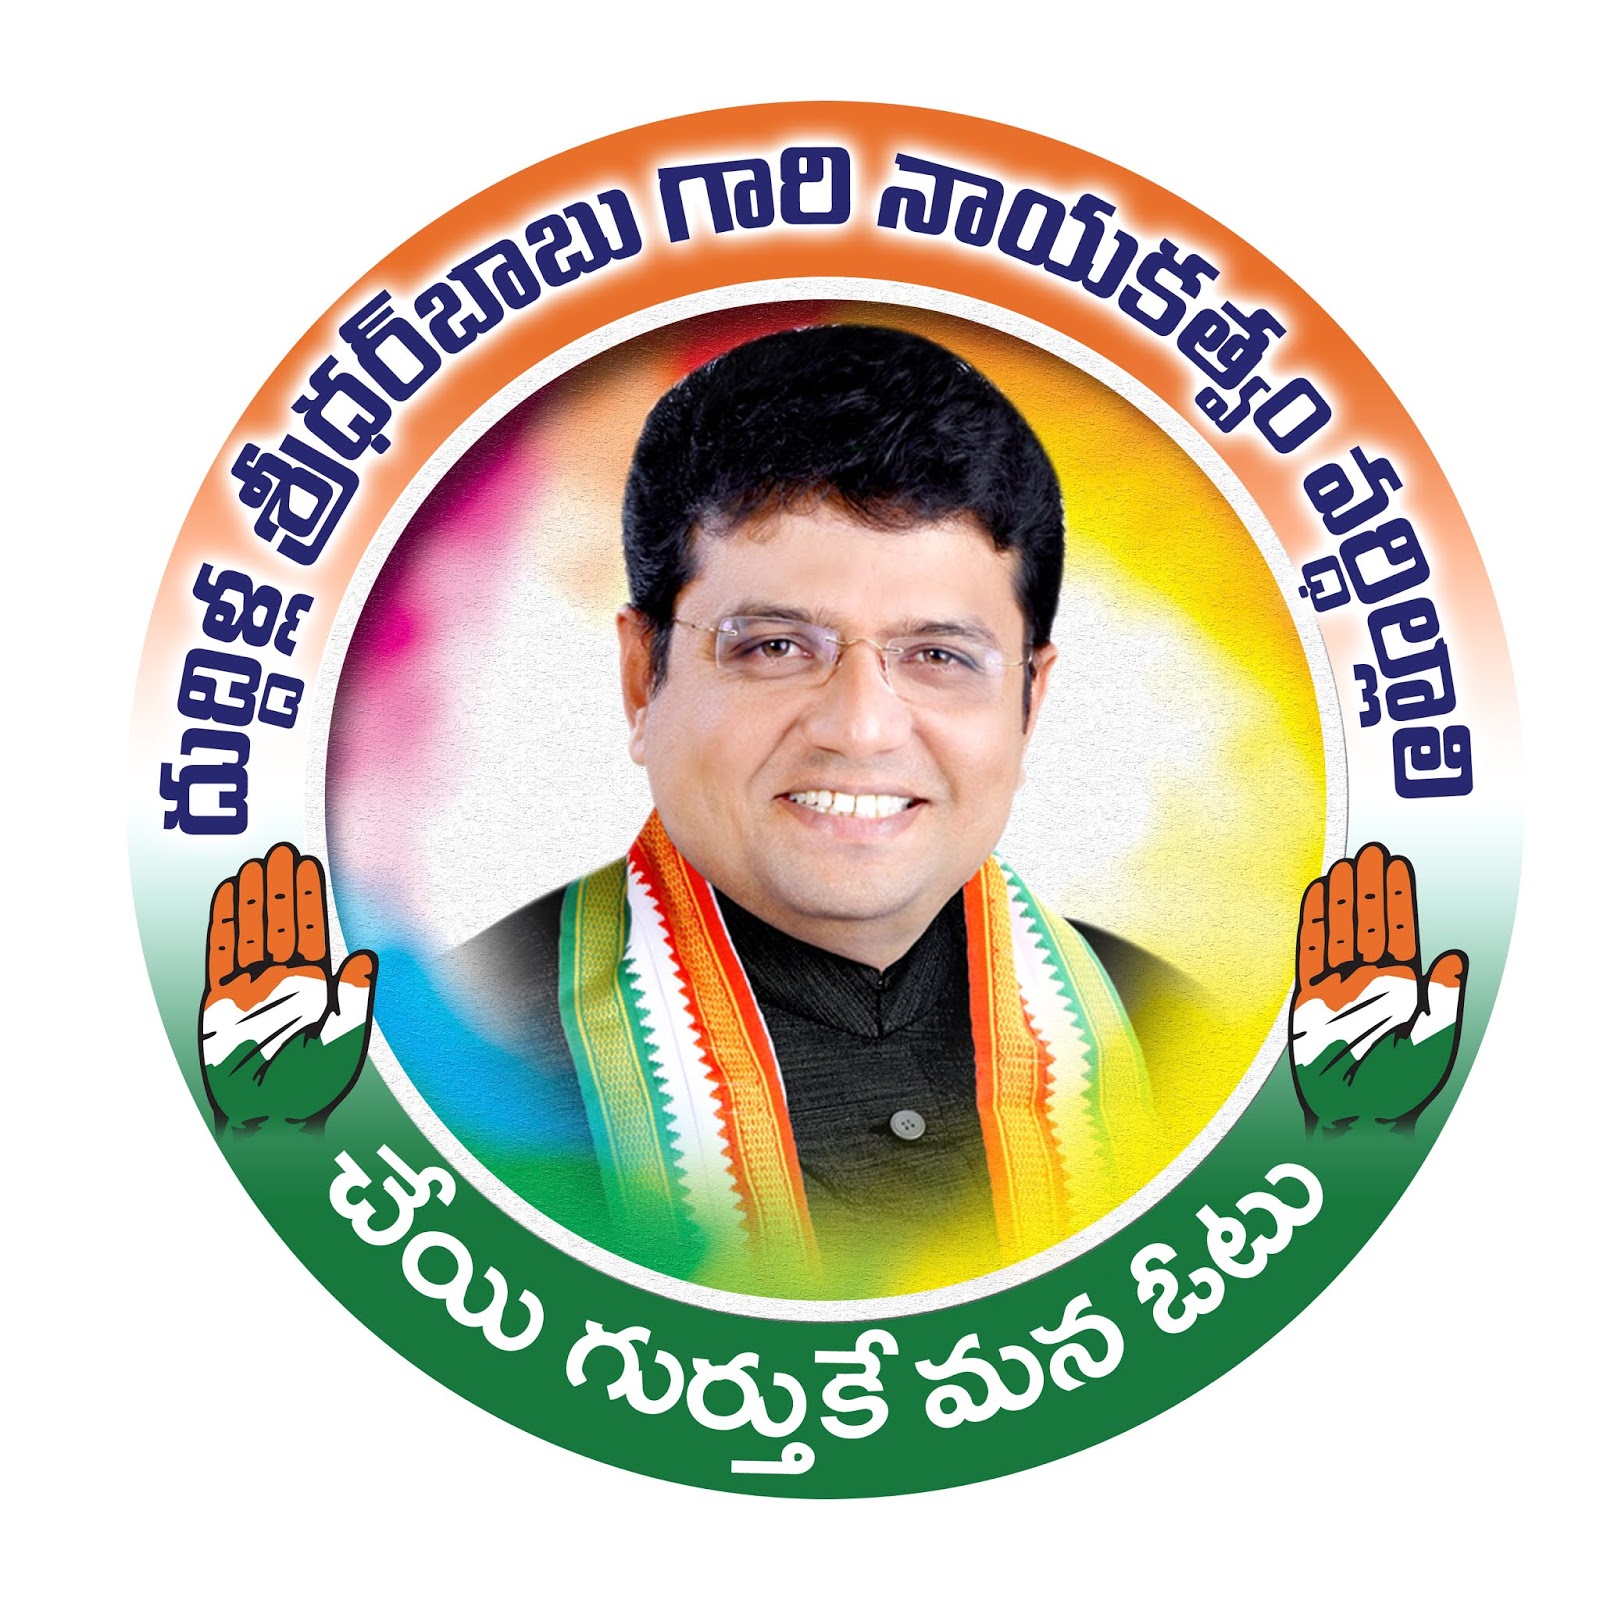 congress party round badge sticker design for manthani mla | naveengfx